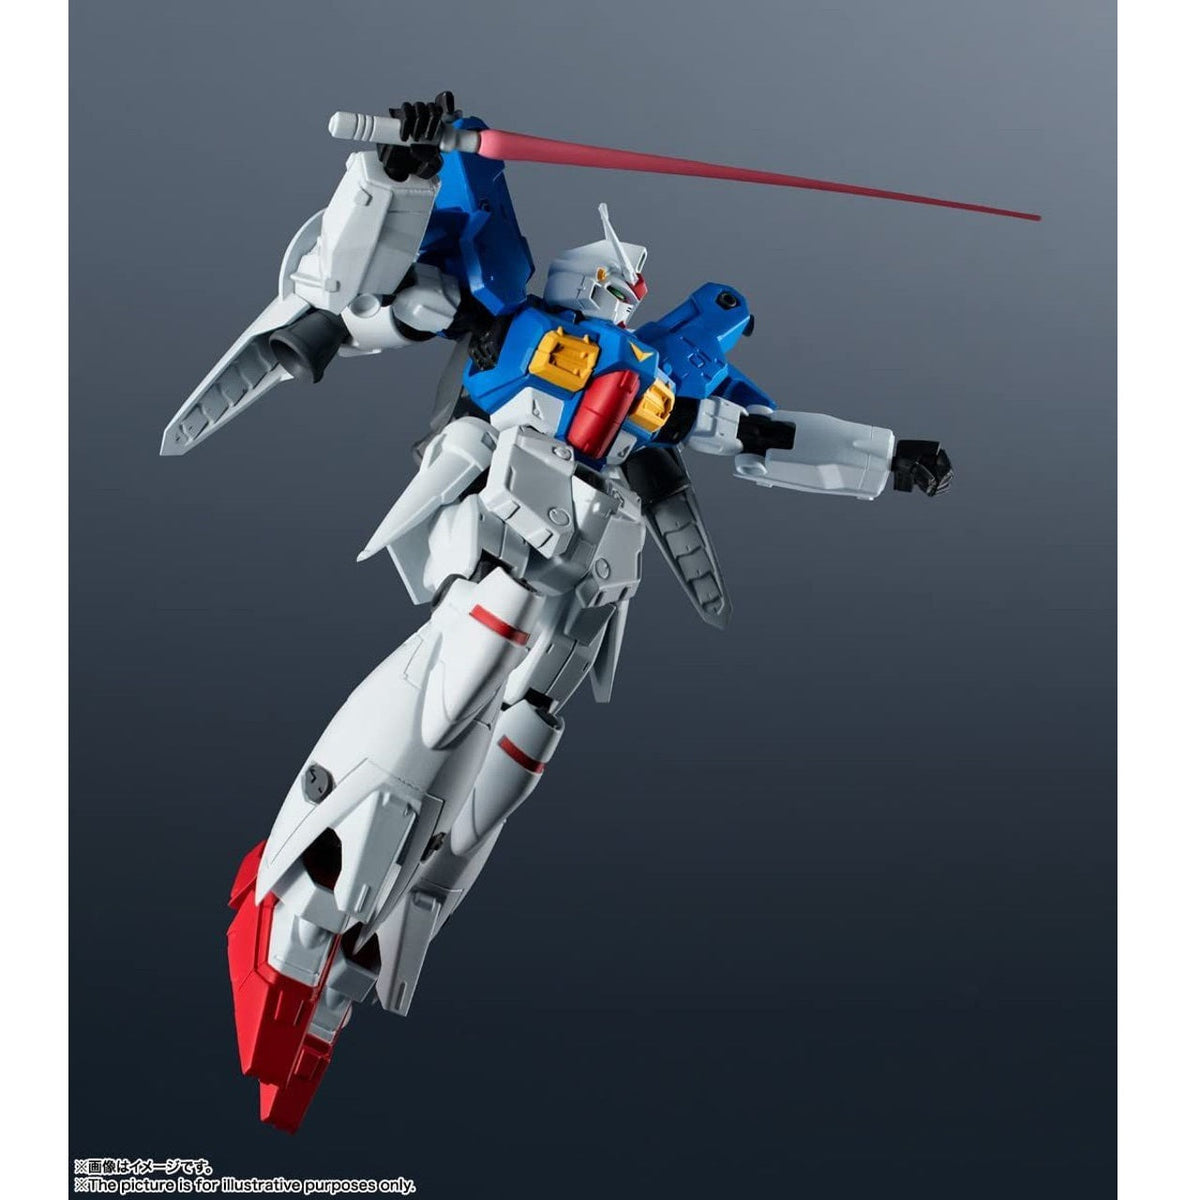 Gundam Universe RX-78GP01Fb Gundam Full Burnern-Tamashii-Ace Cards &amp; Collectibles